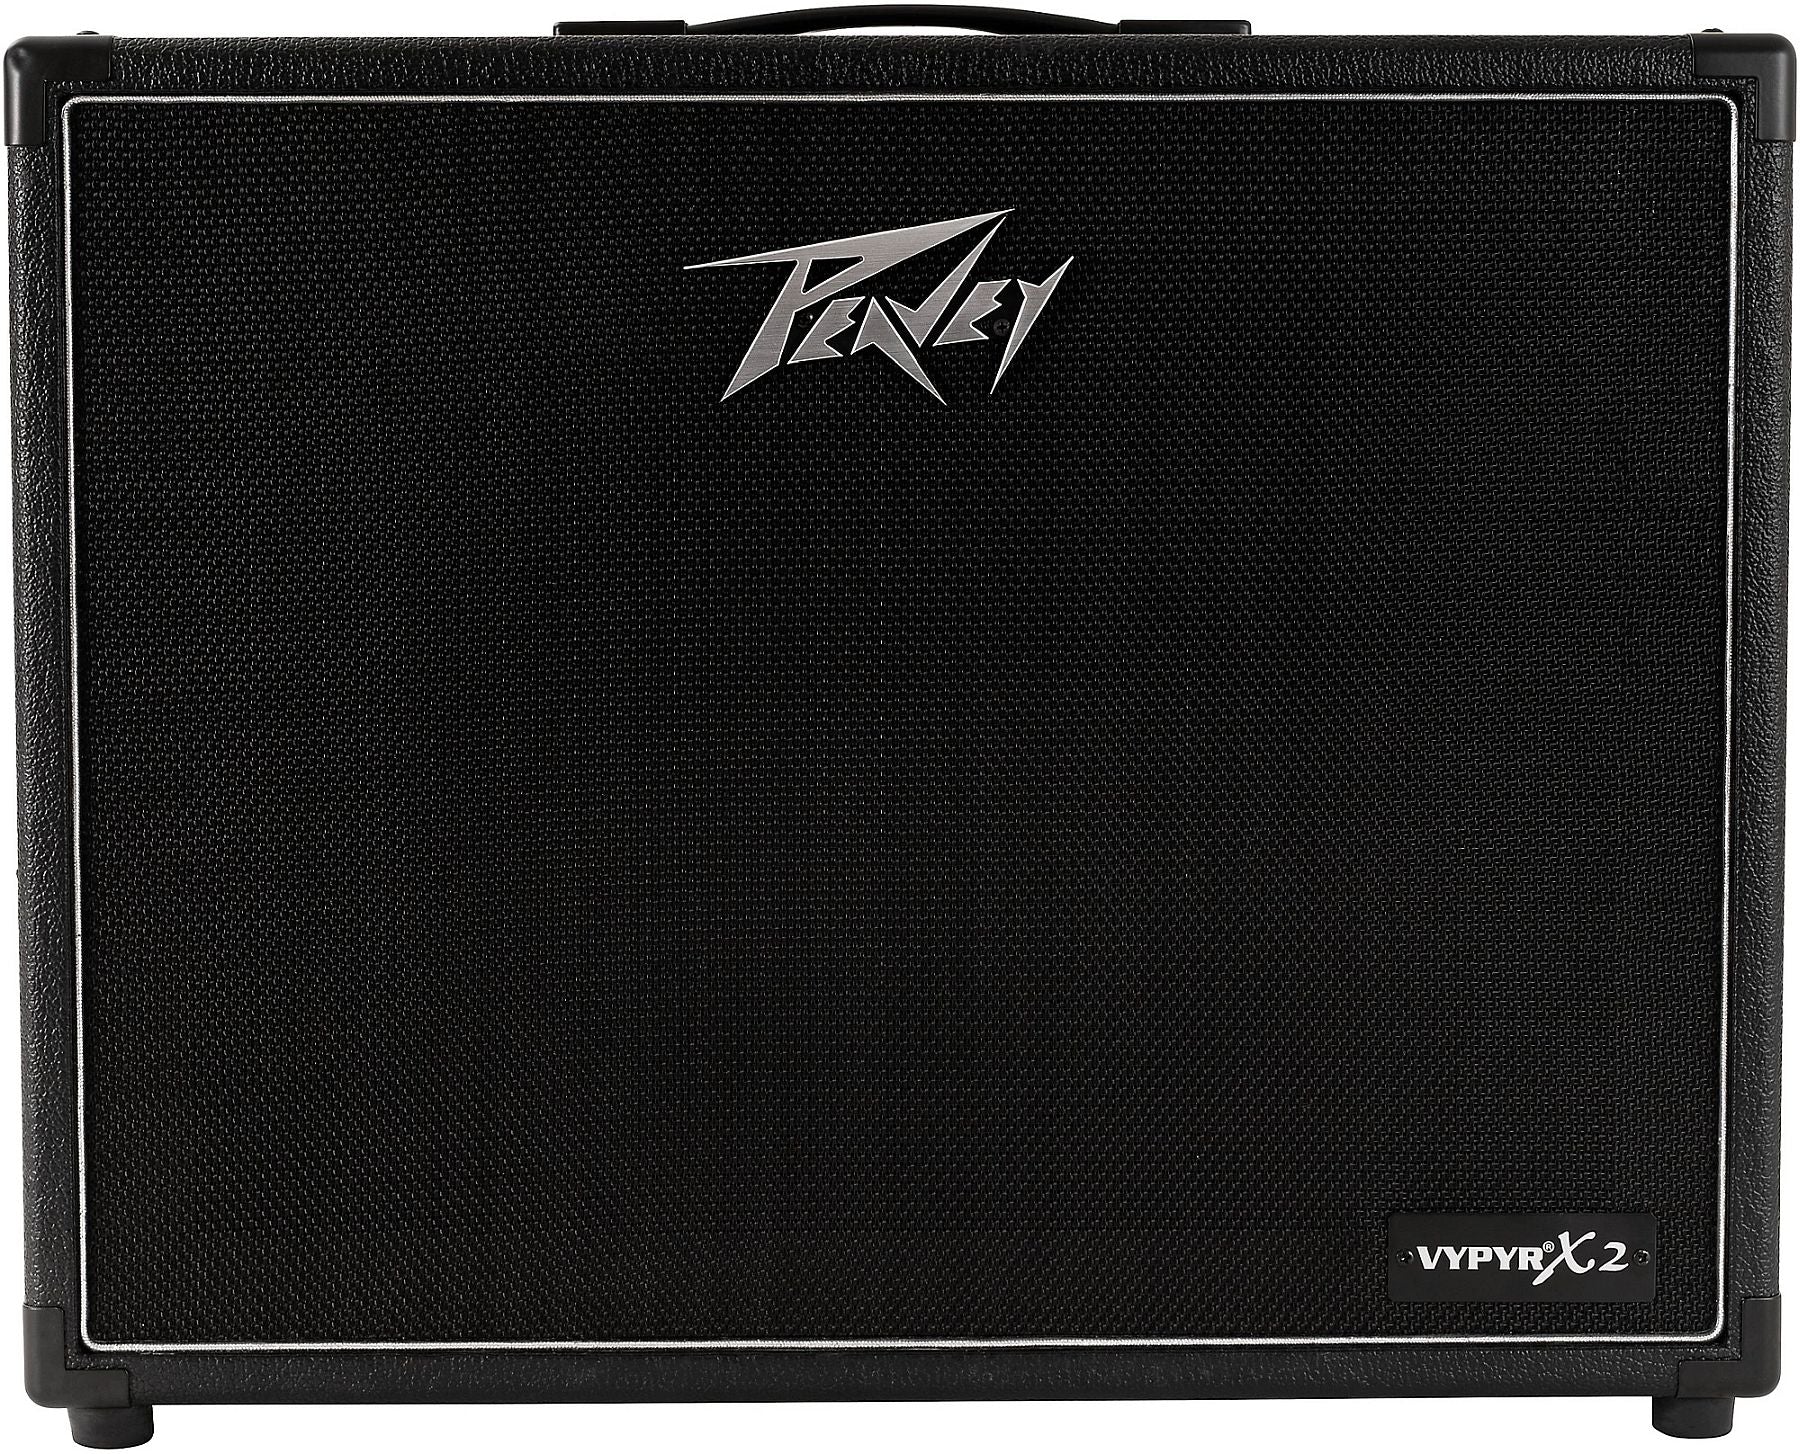 Peavey Vypyr X2 40 Watt 1x12 inch Modeling Guitar/Bass/Acoustic Combo Amplifier 03617750